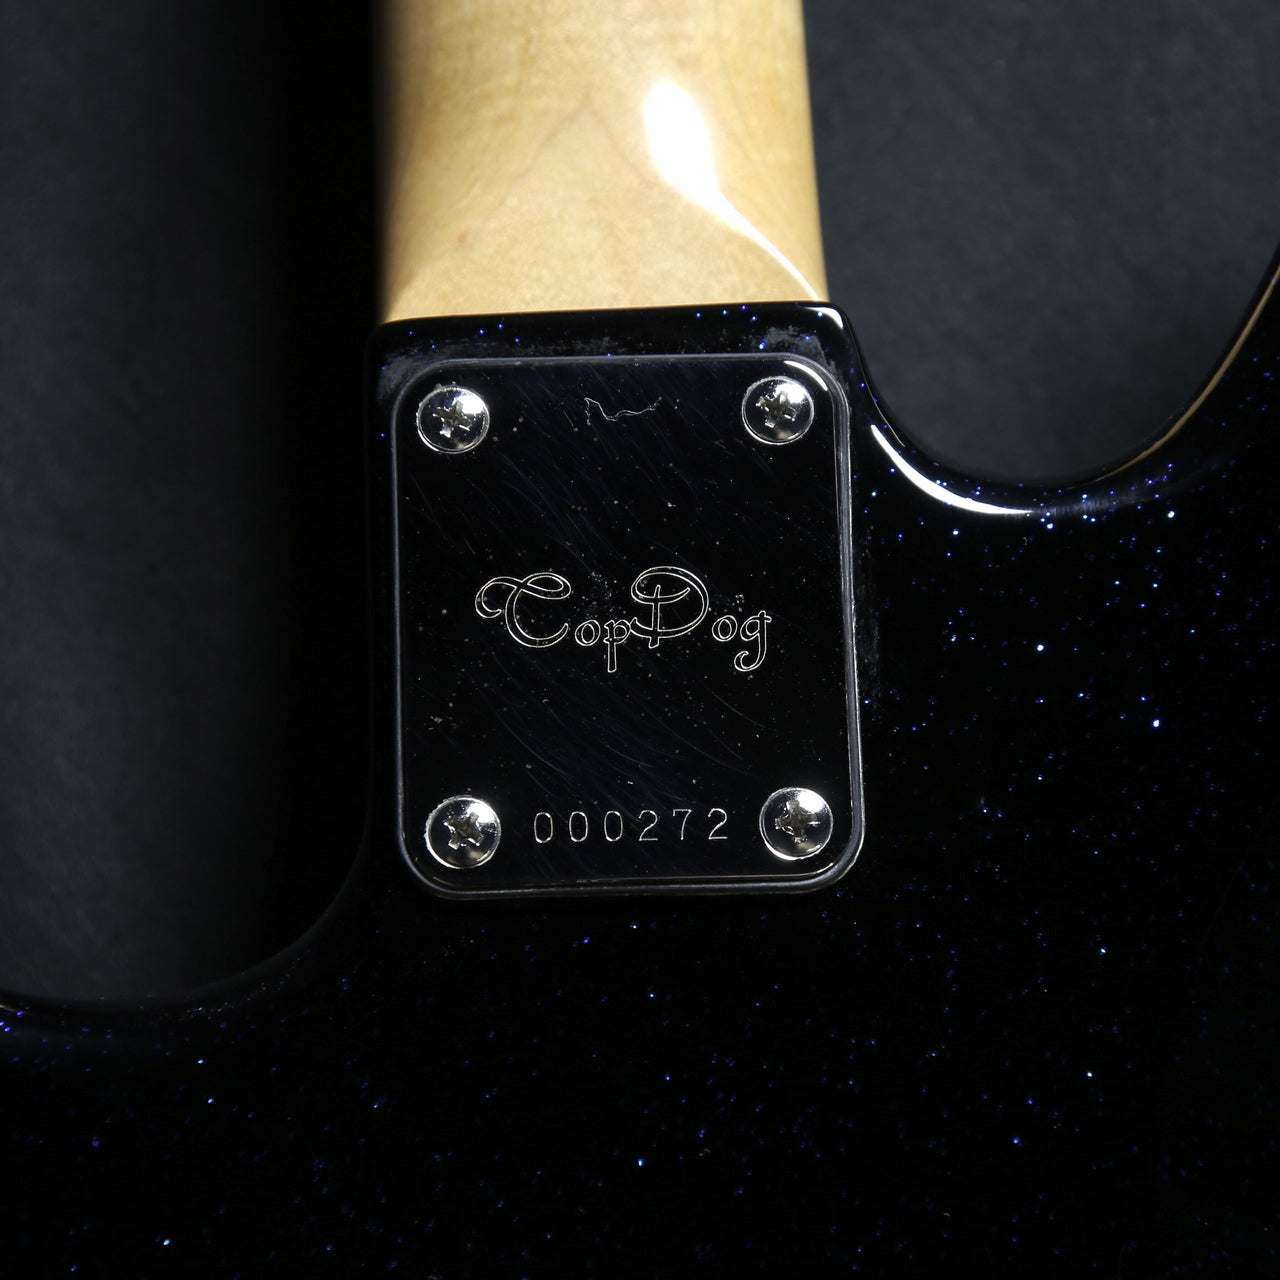 SG Crafts Top Dog Medium Scale Bass